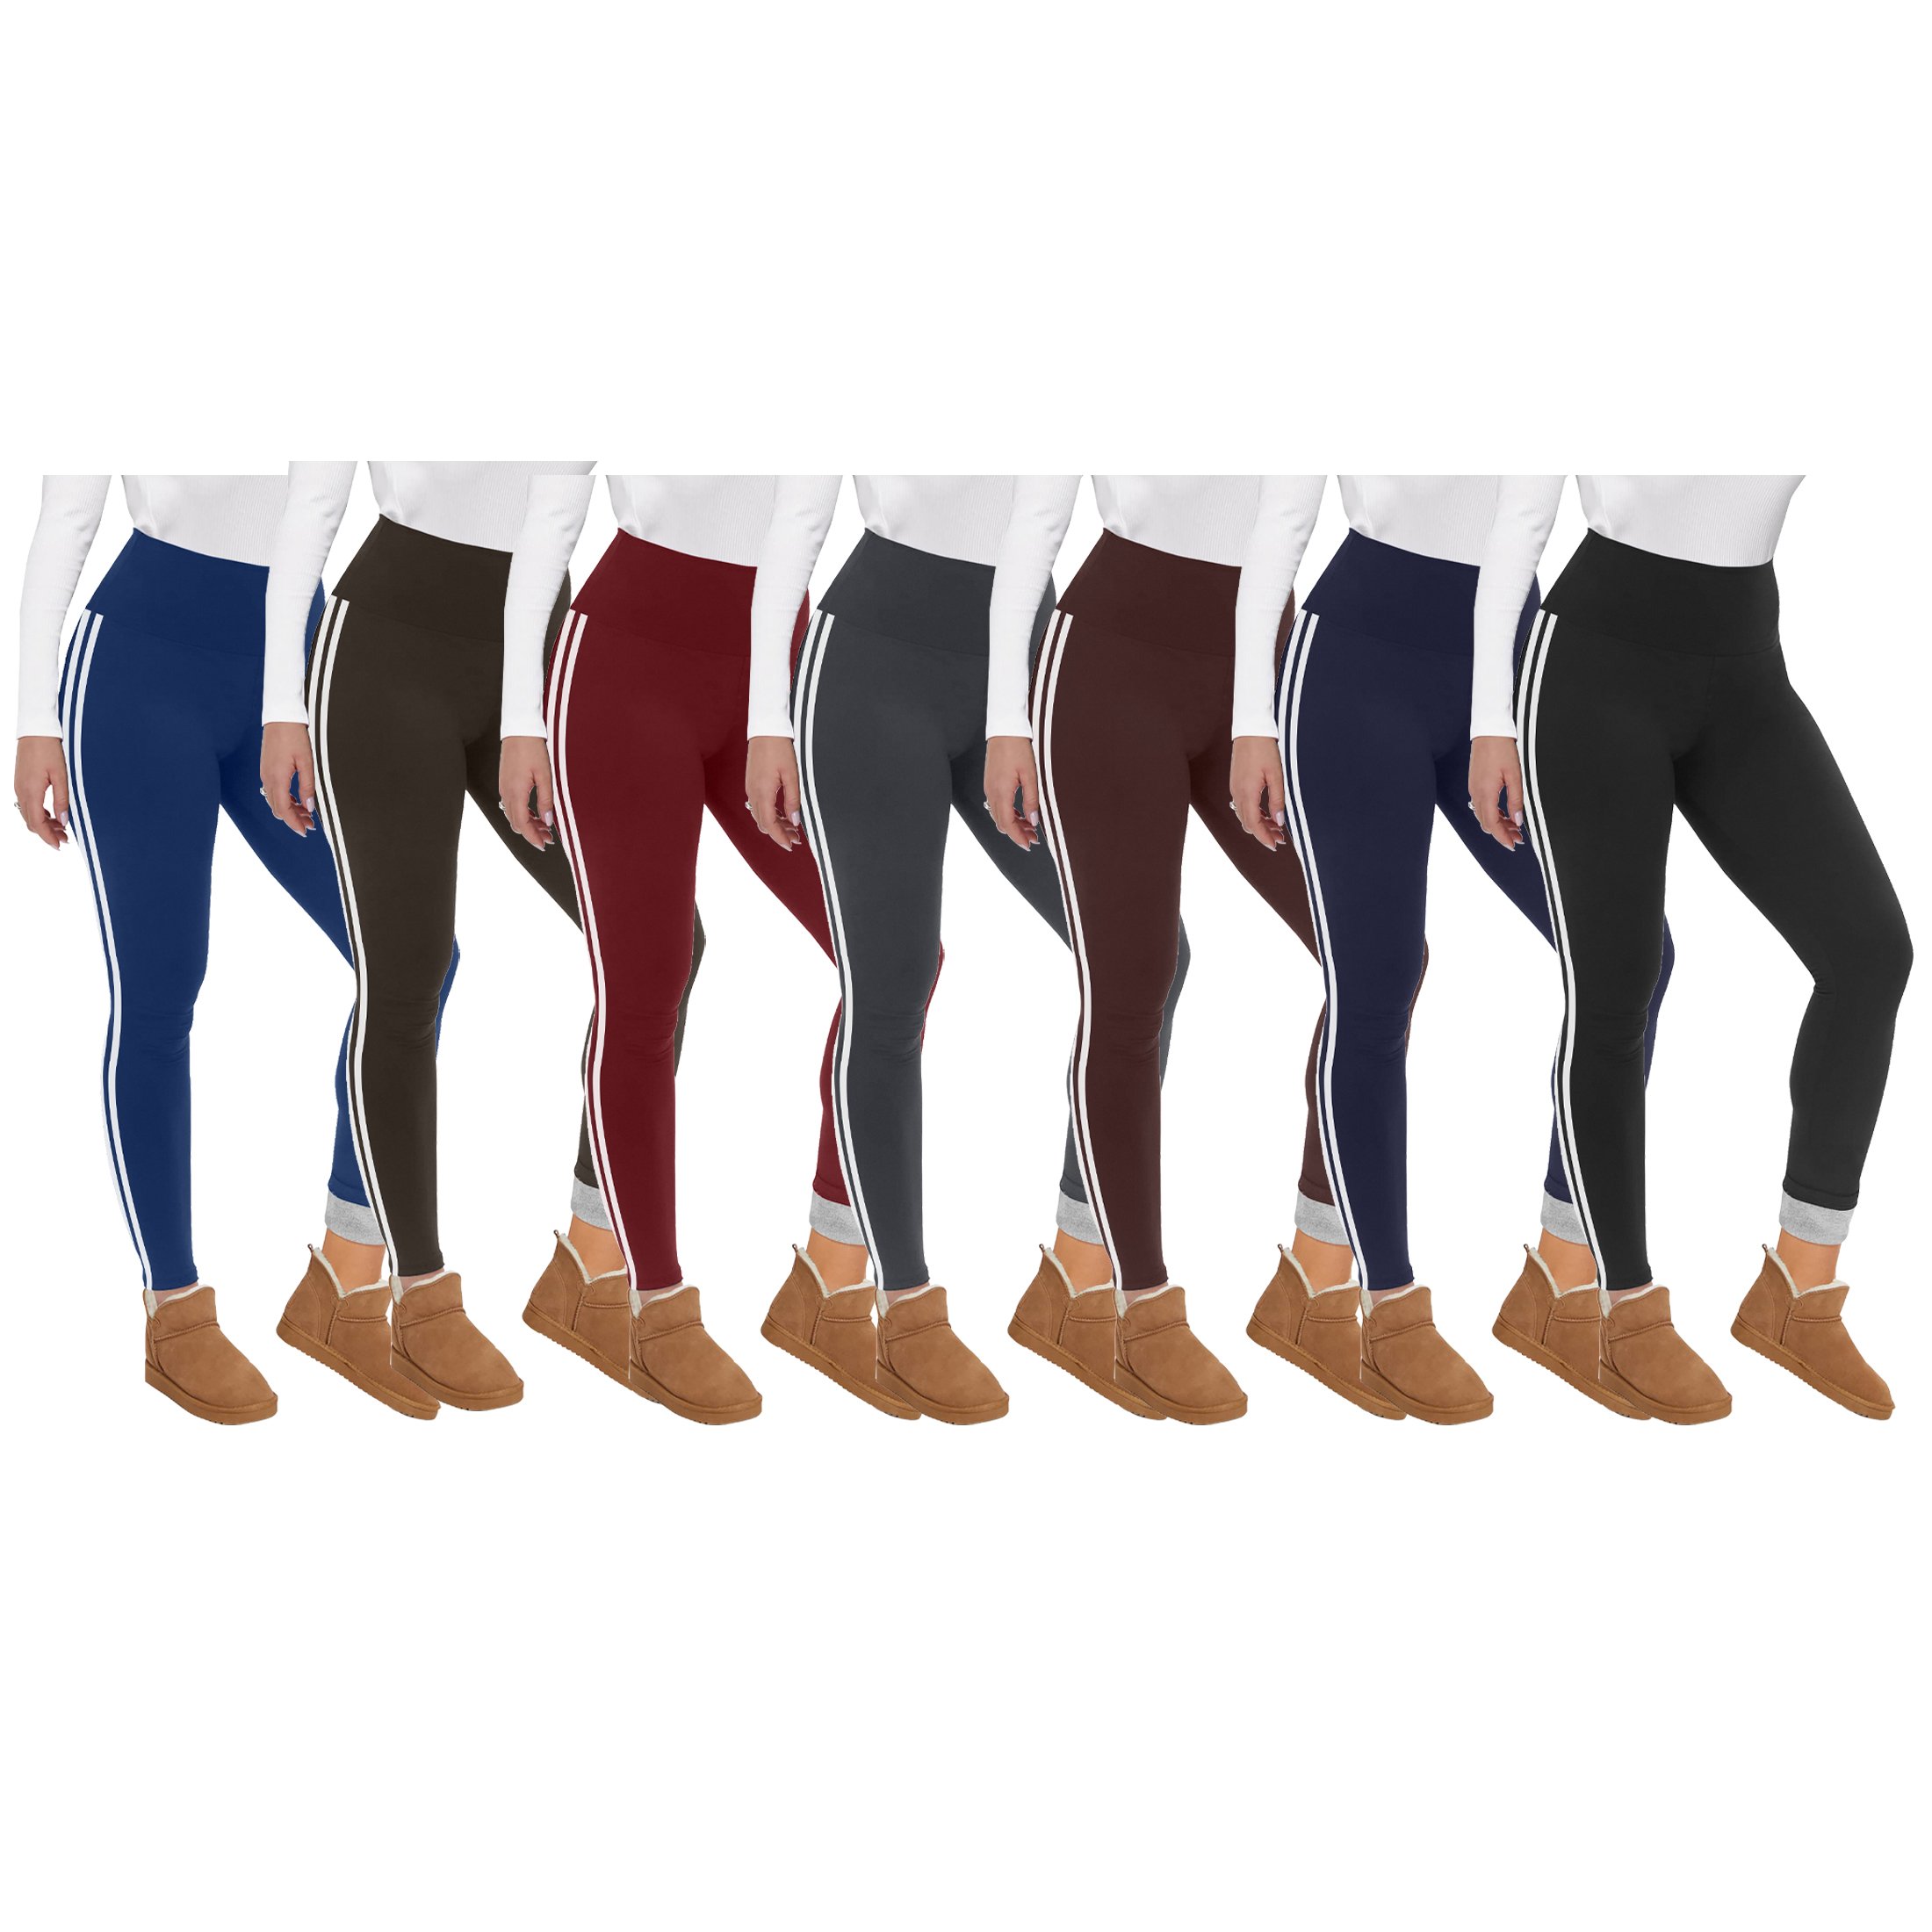 3-Pack: Women's Ultra Soft Fur Lined Yoga Pants High Waisted Leggings - S/M